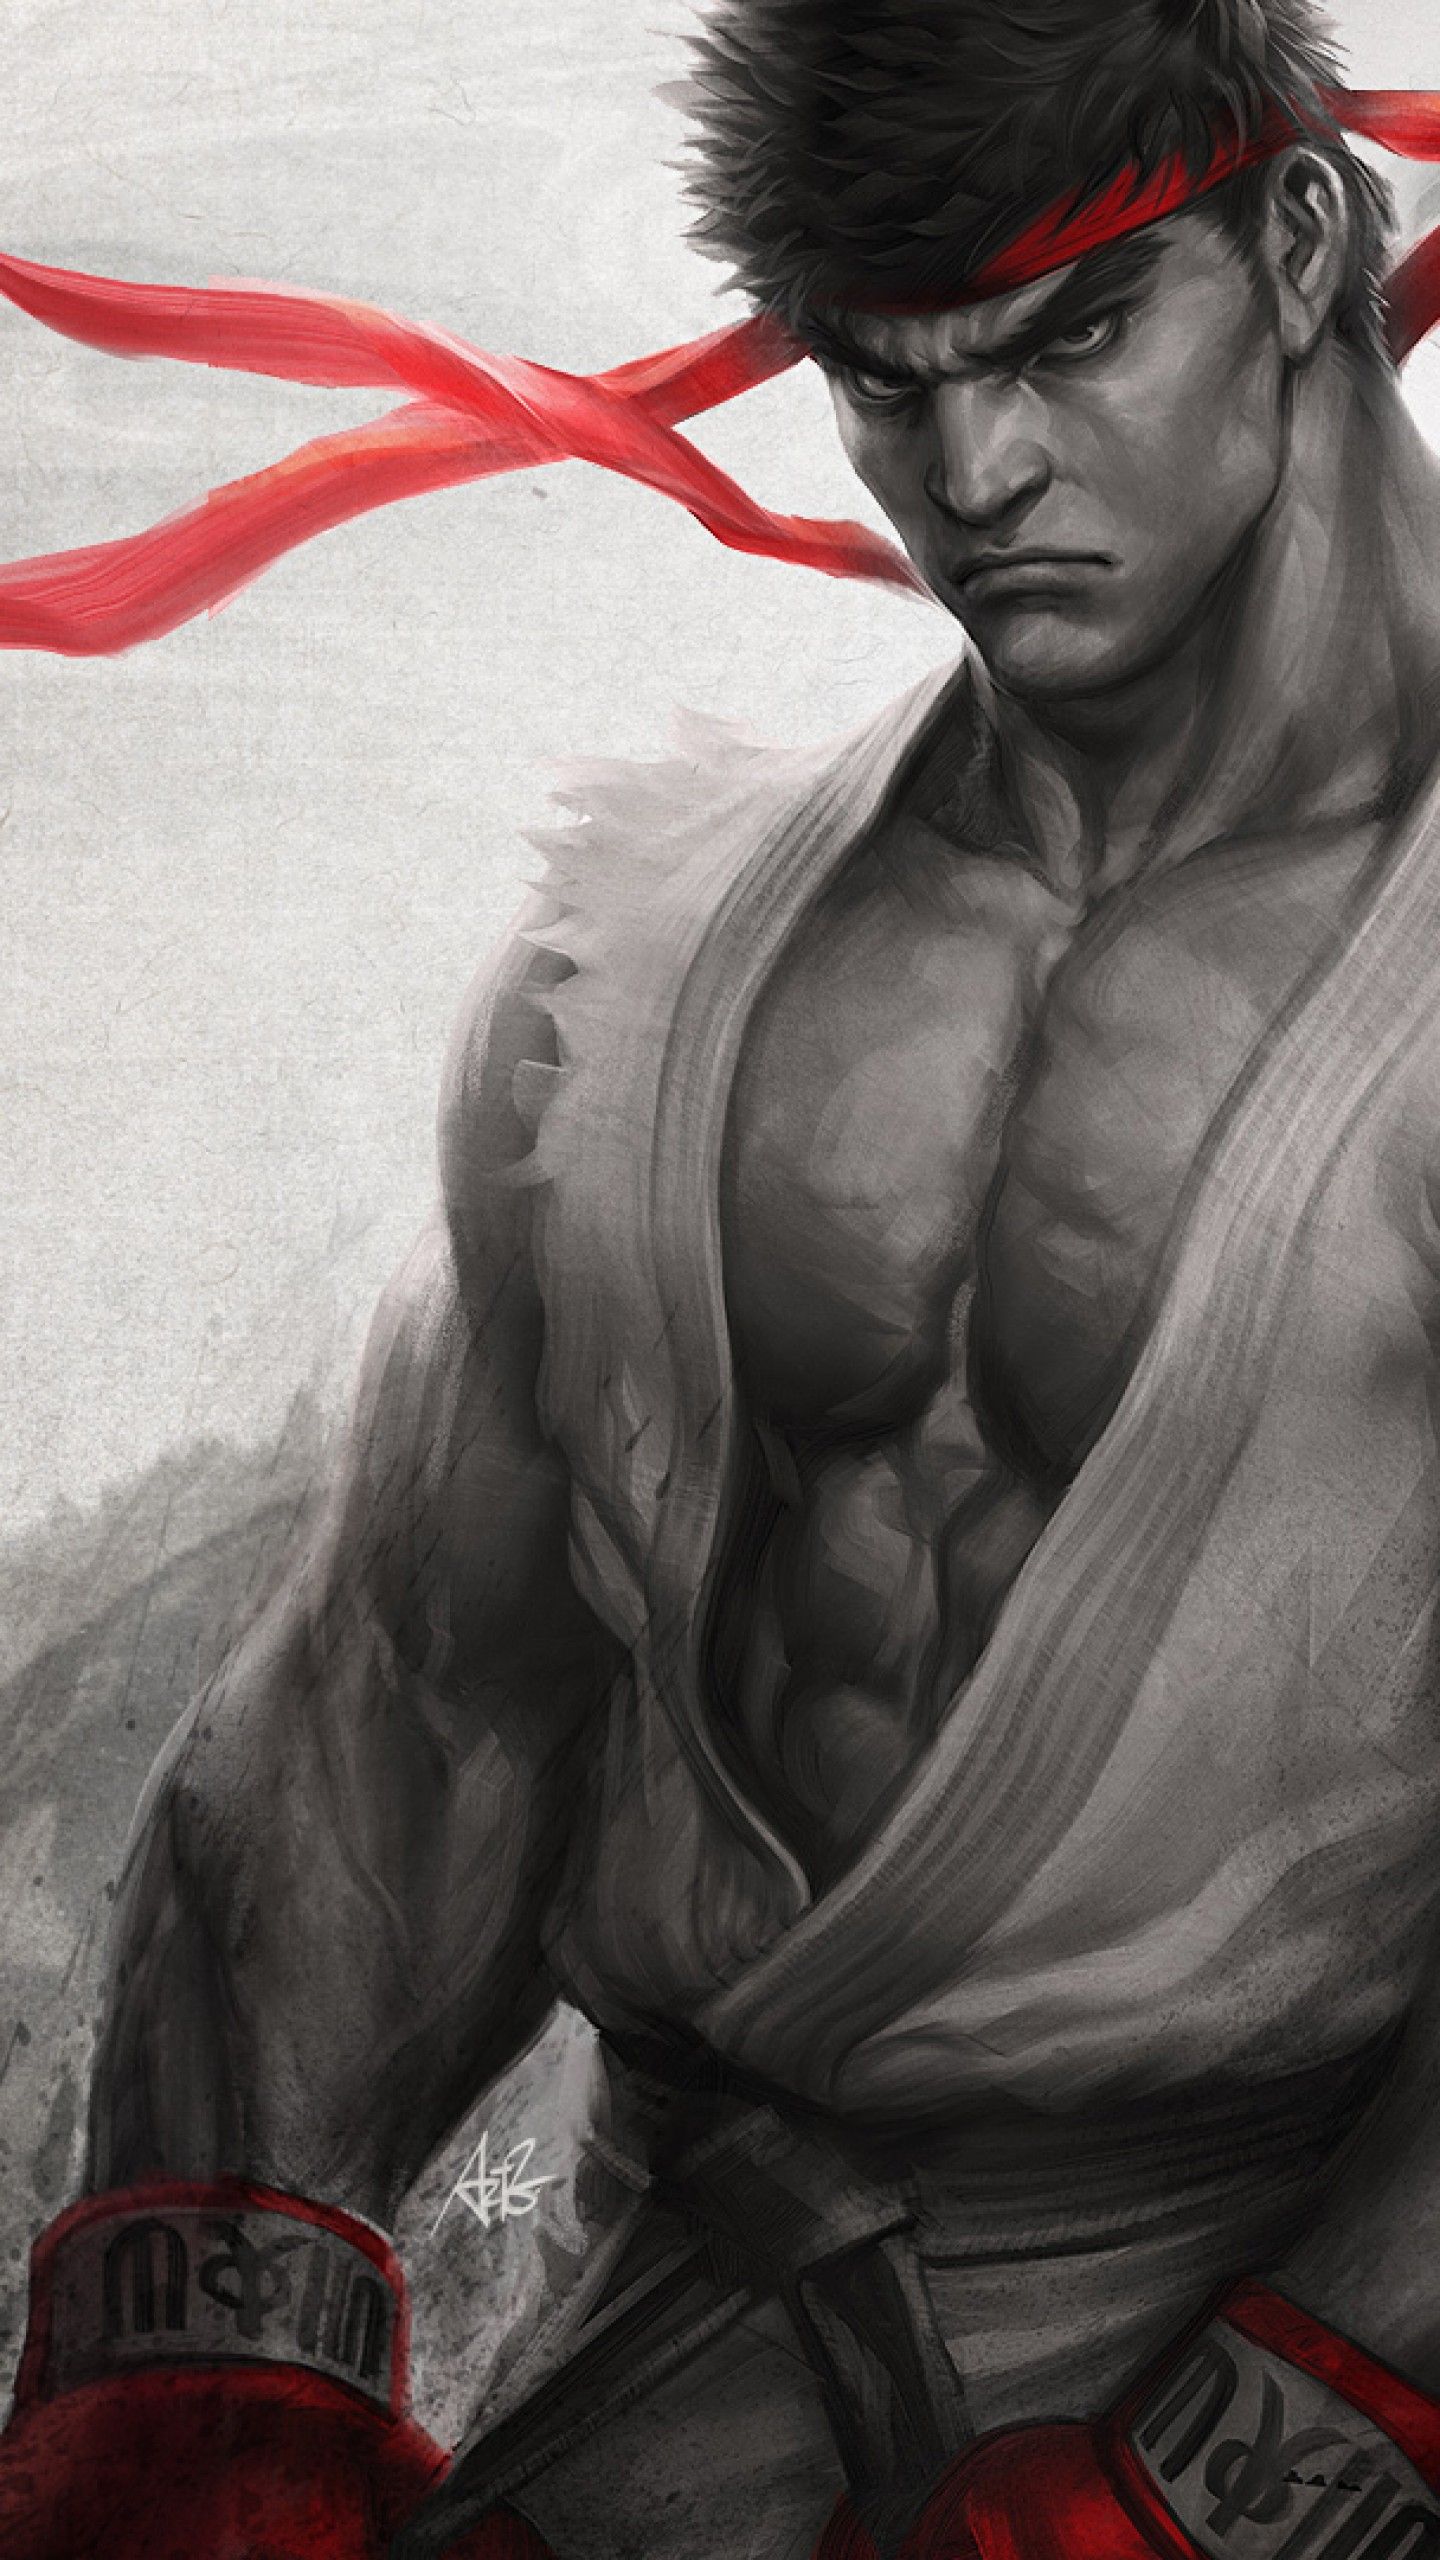 Ryu Street Fighter  Ryu street fighter, Street fighter wallpaper